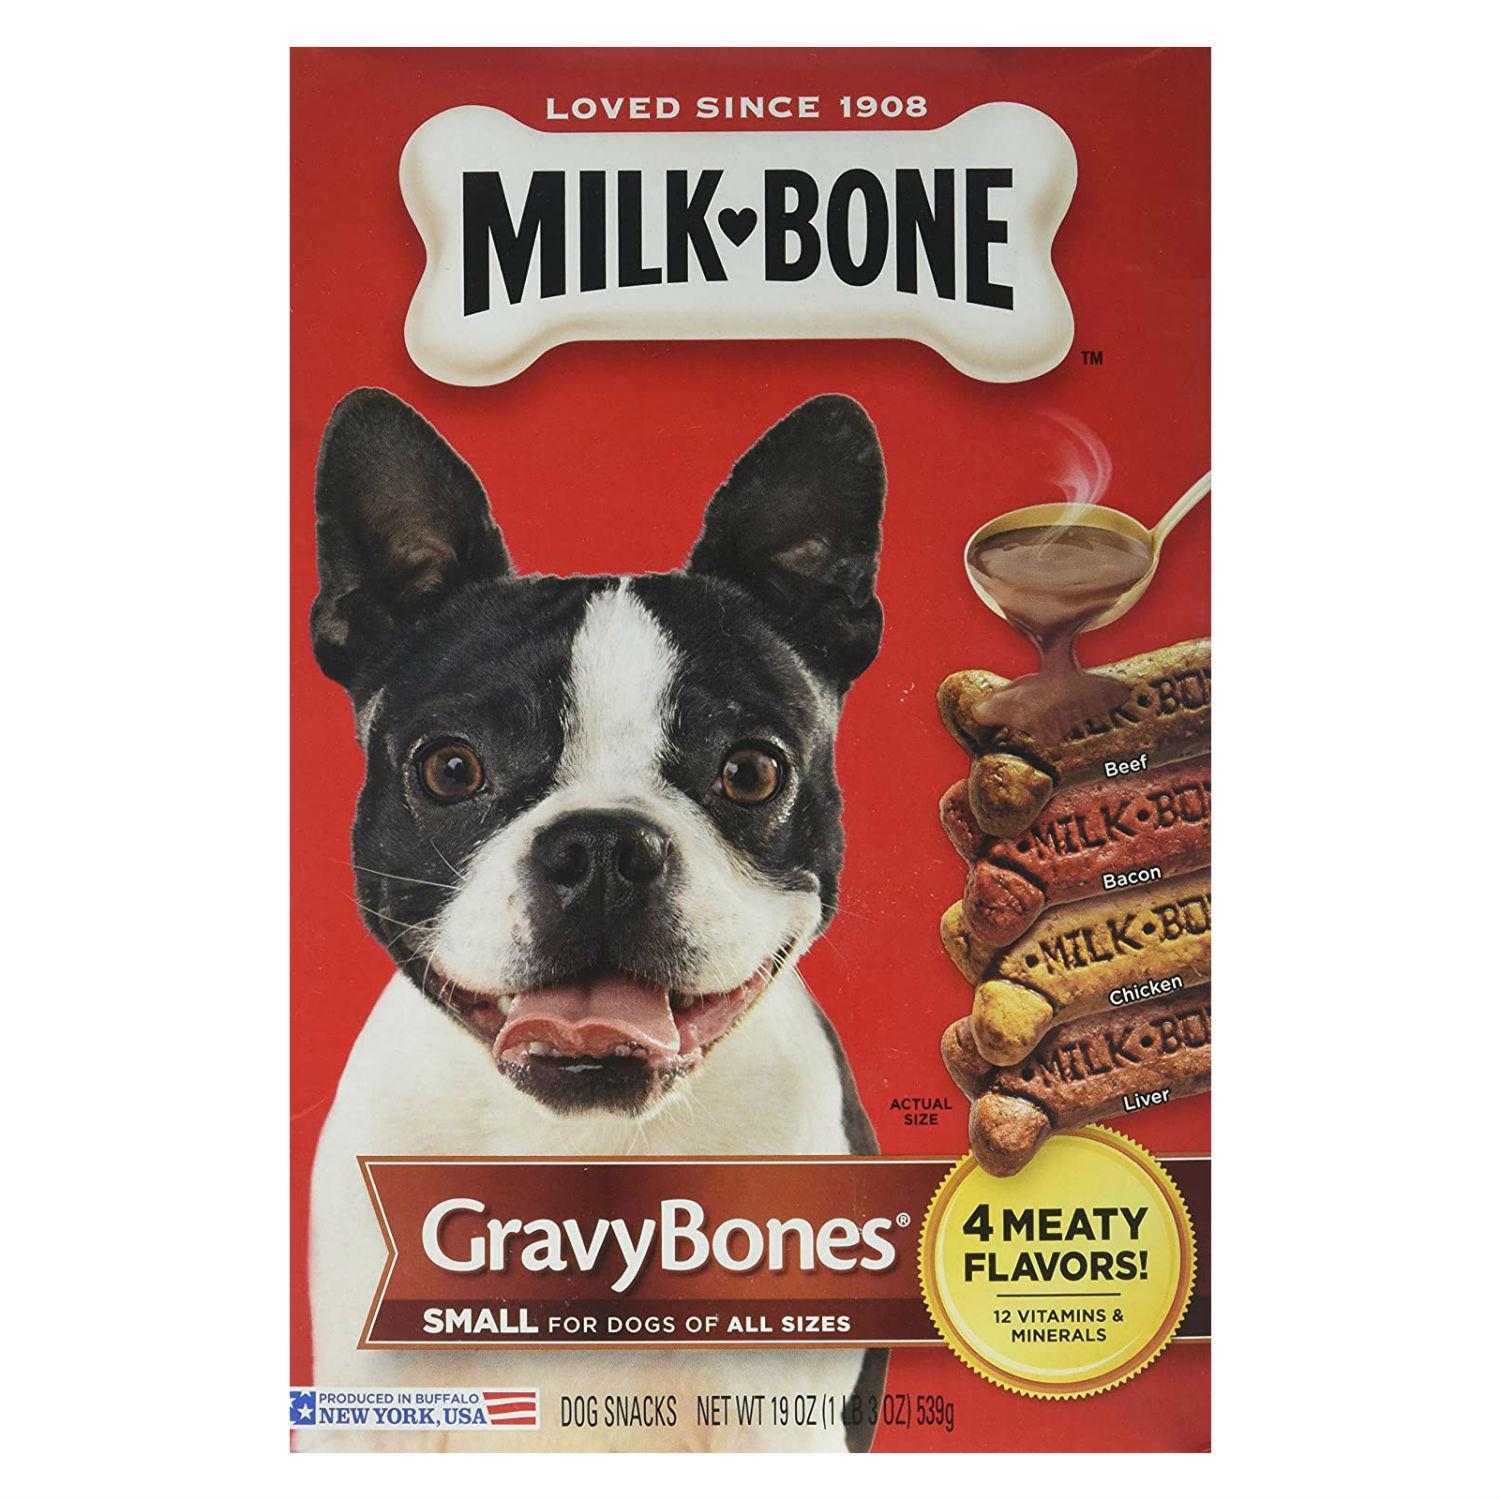 Milk-Bone GravyBones Small Biscuit Dog Treats